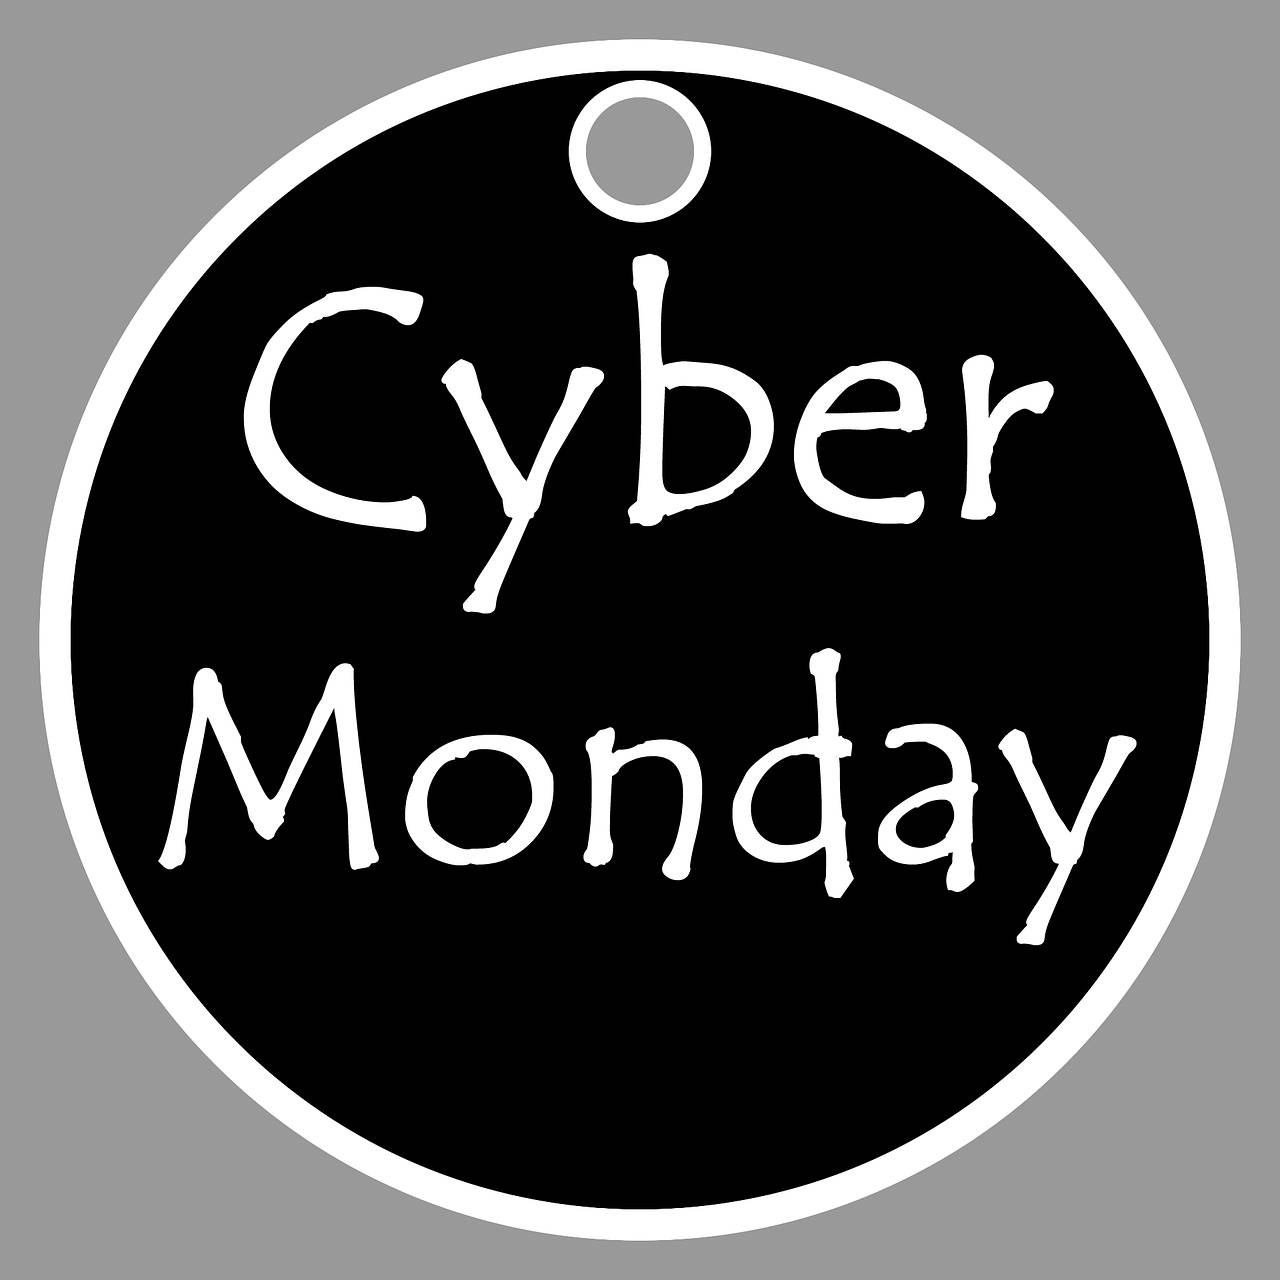 Cyber Monday Circular Door Signage Wallpaper